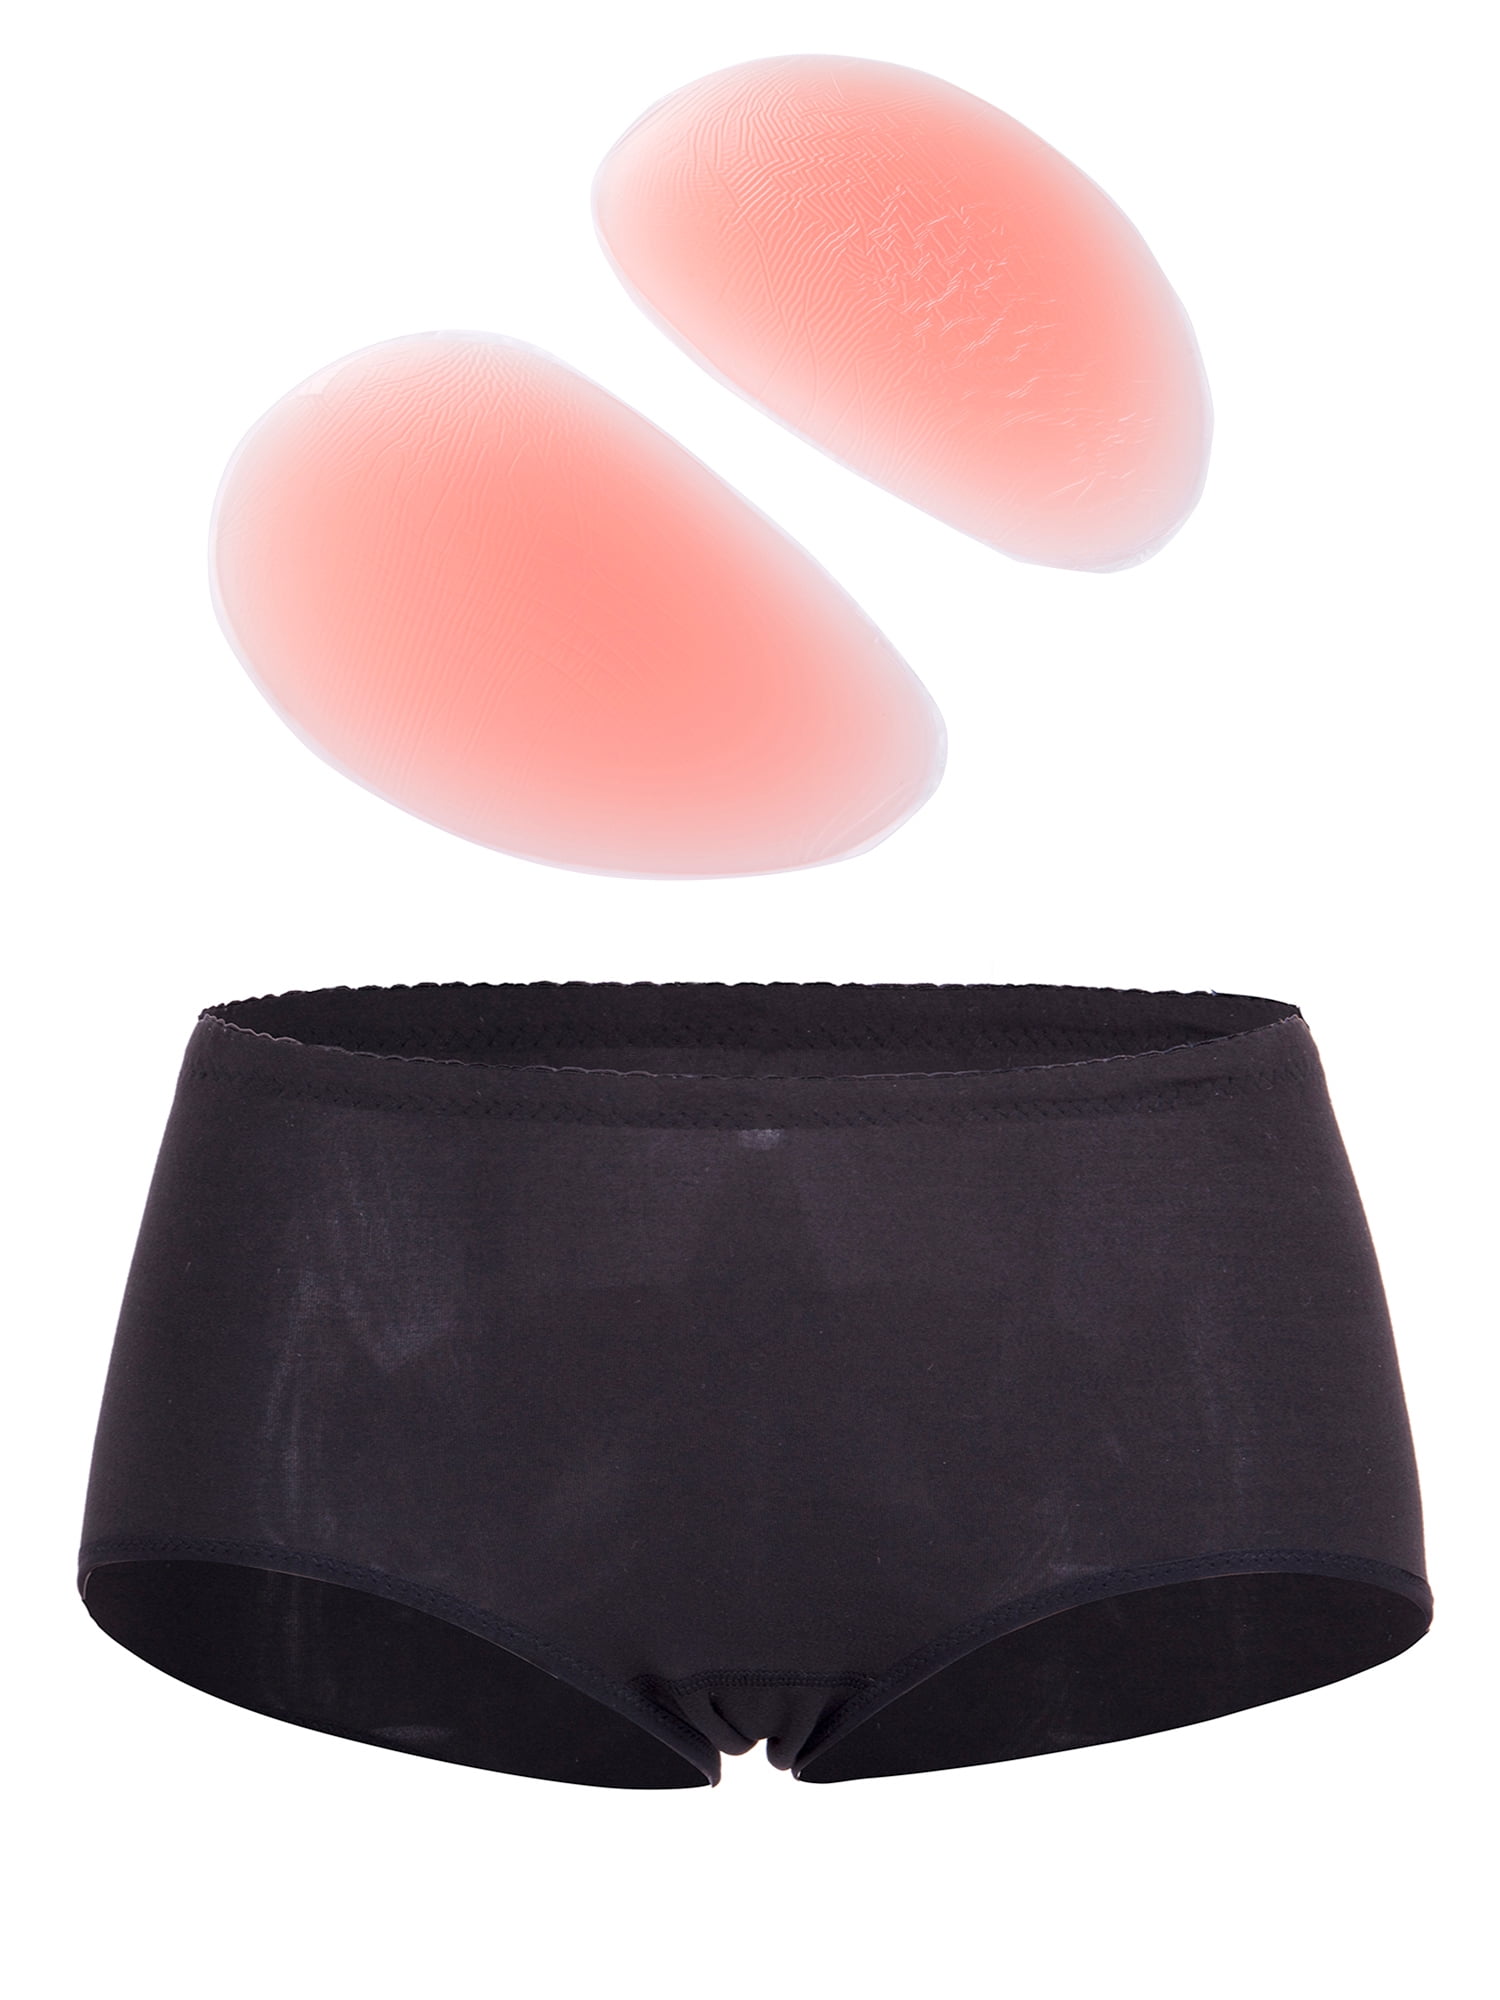 Pink Silicone Butt Enhancer Panties Gif